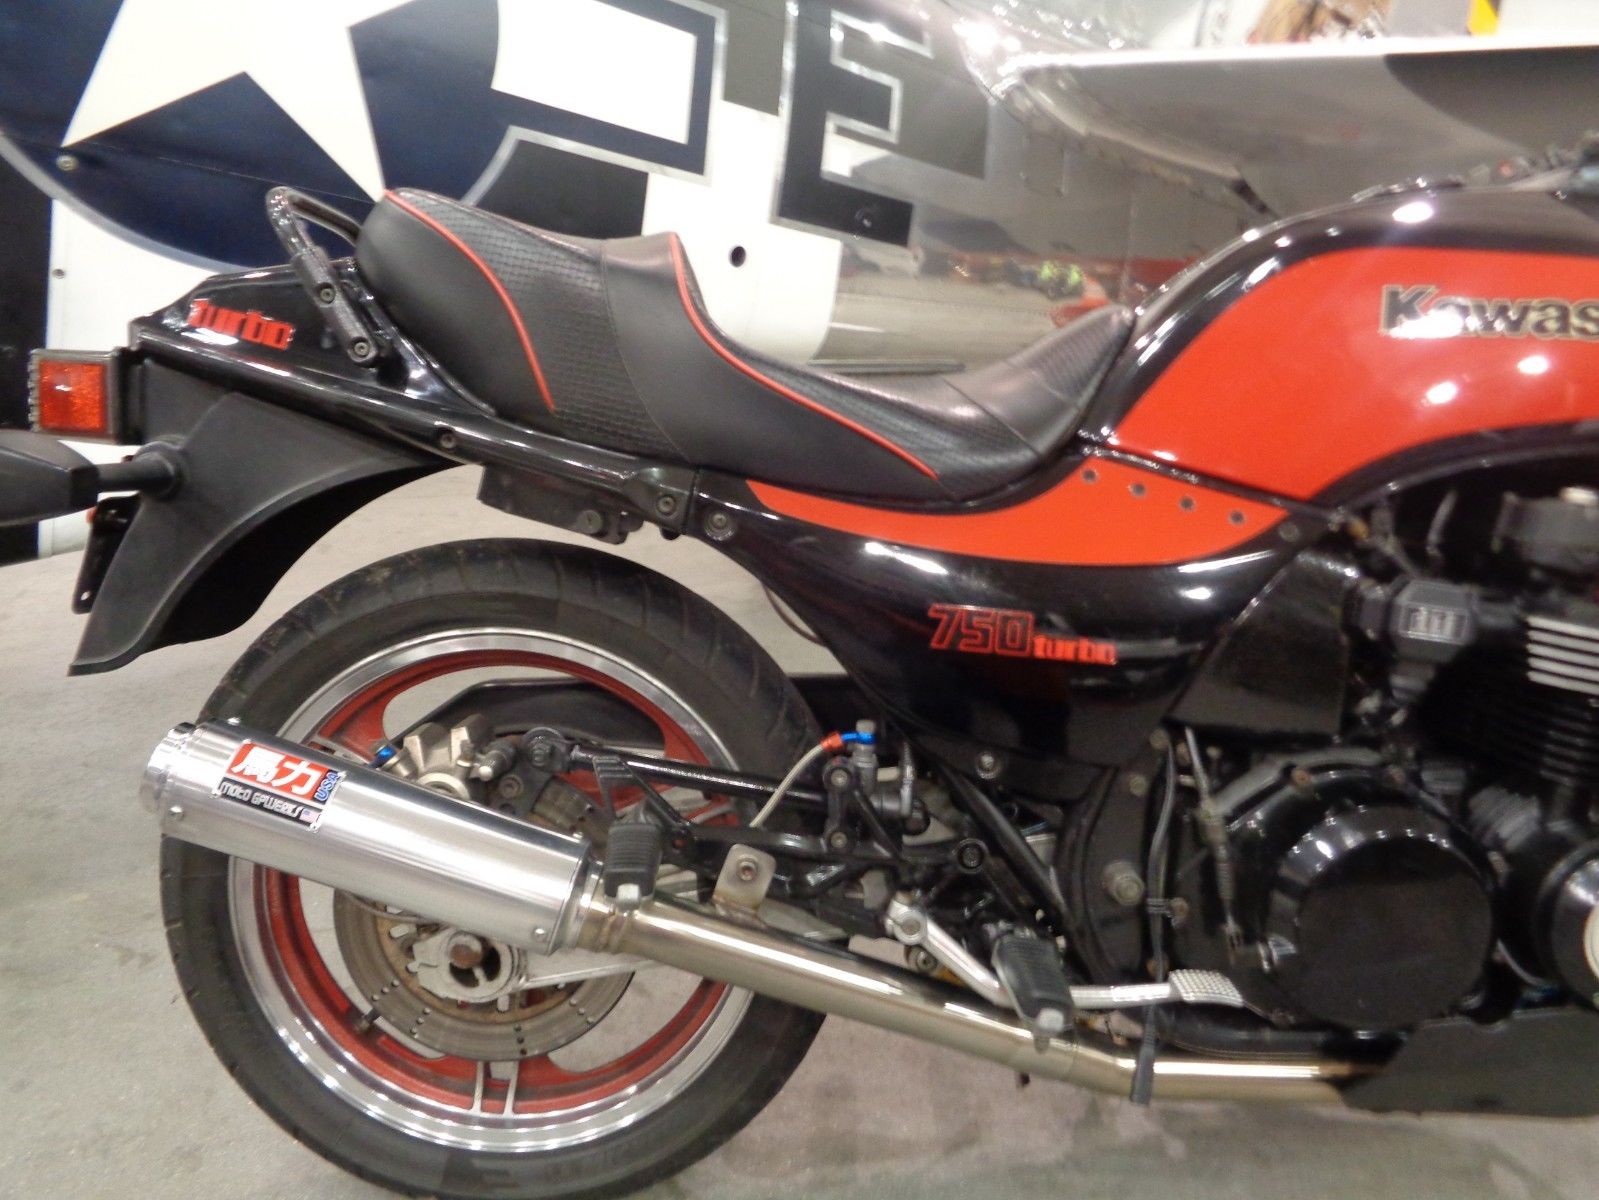 Bryde igennem prins asiatisk Customized 1984 Kawasaki GPz750 Turbo Makes 180 Horsepower - webBikeWorld